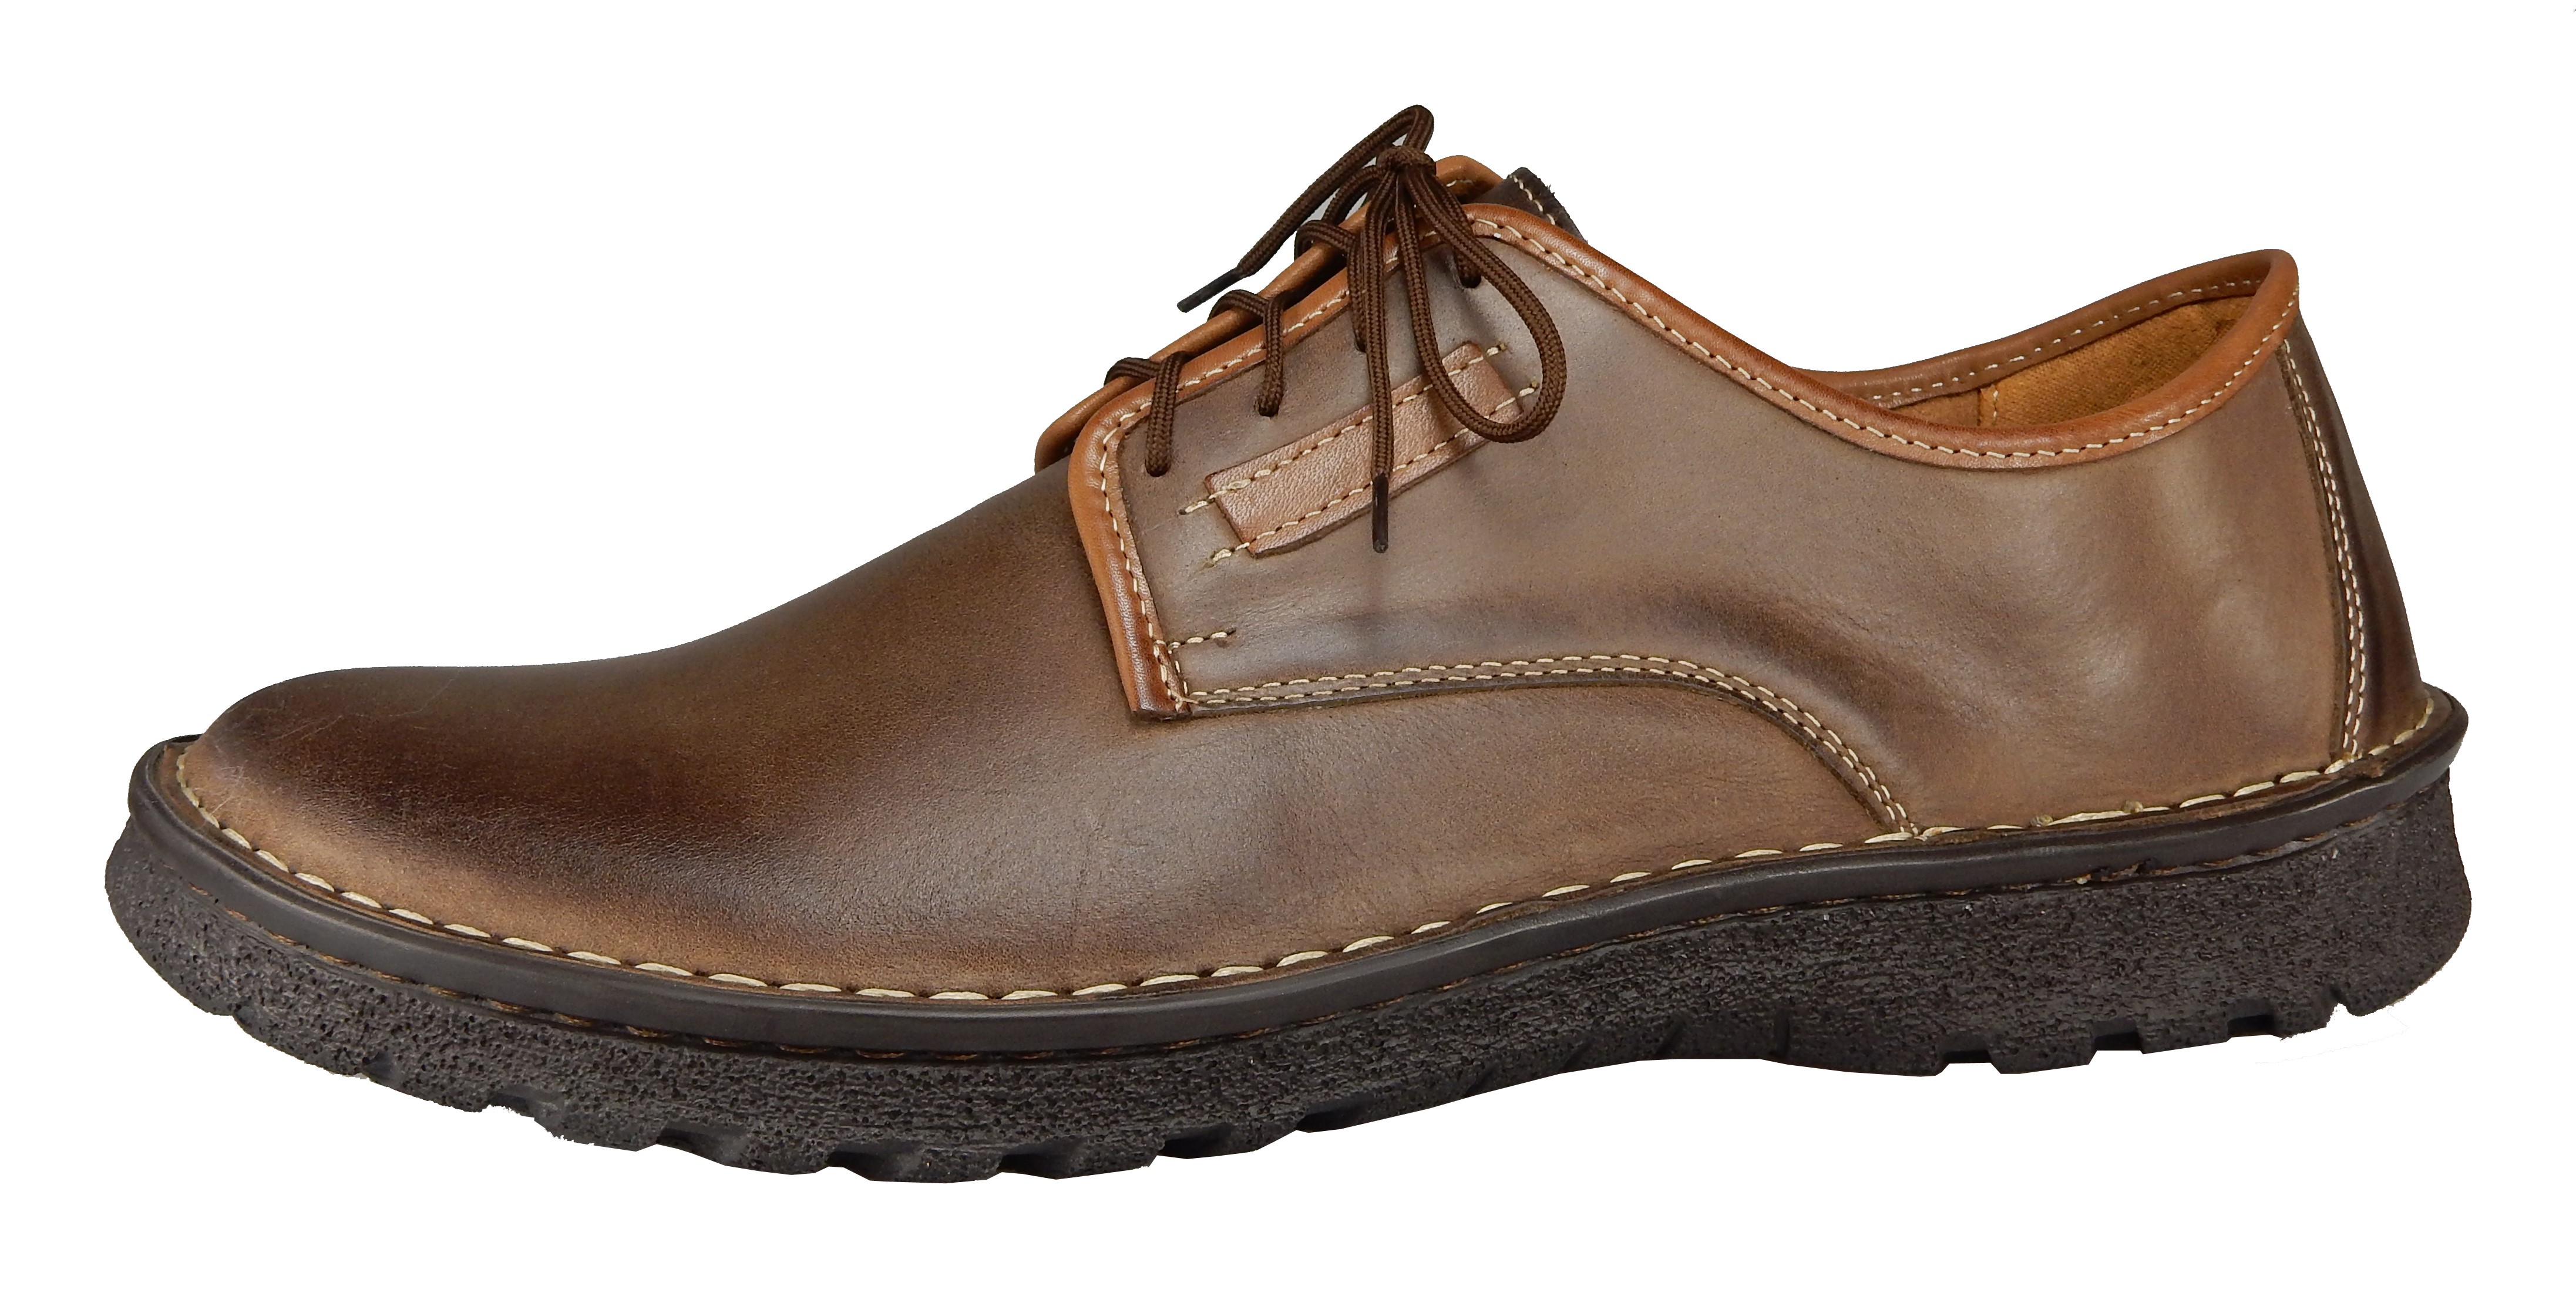 * Pánské hnědé kožené, zdravotně tvarované široké boty ORTO PLUS D00400 - 11 Tabulka pánských velikostí: 43